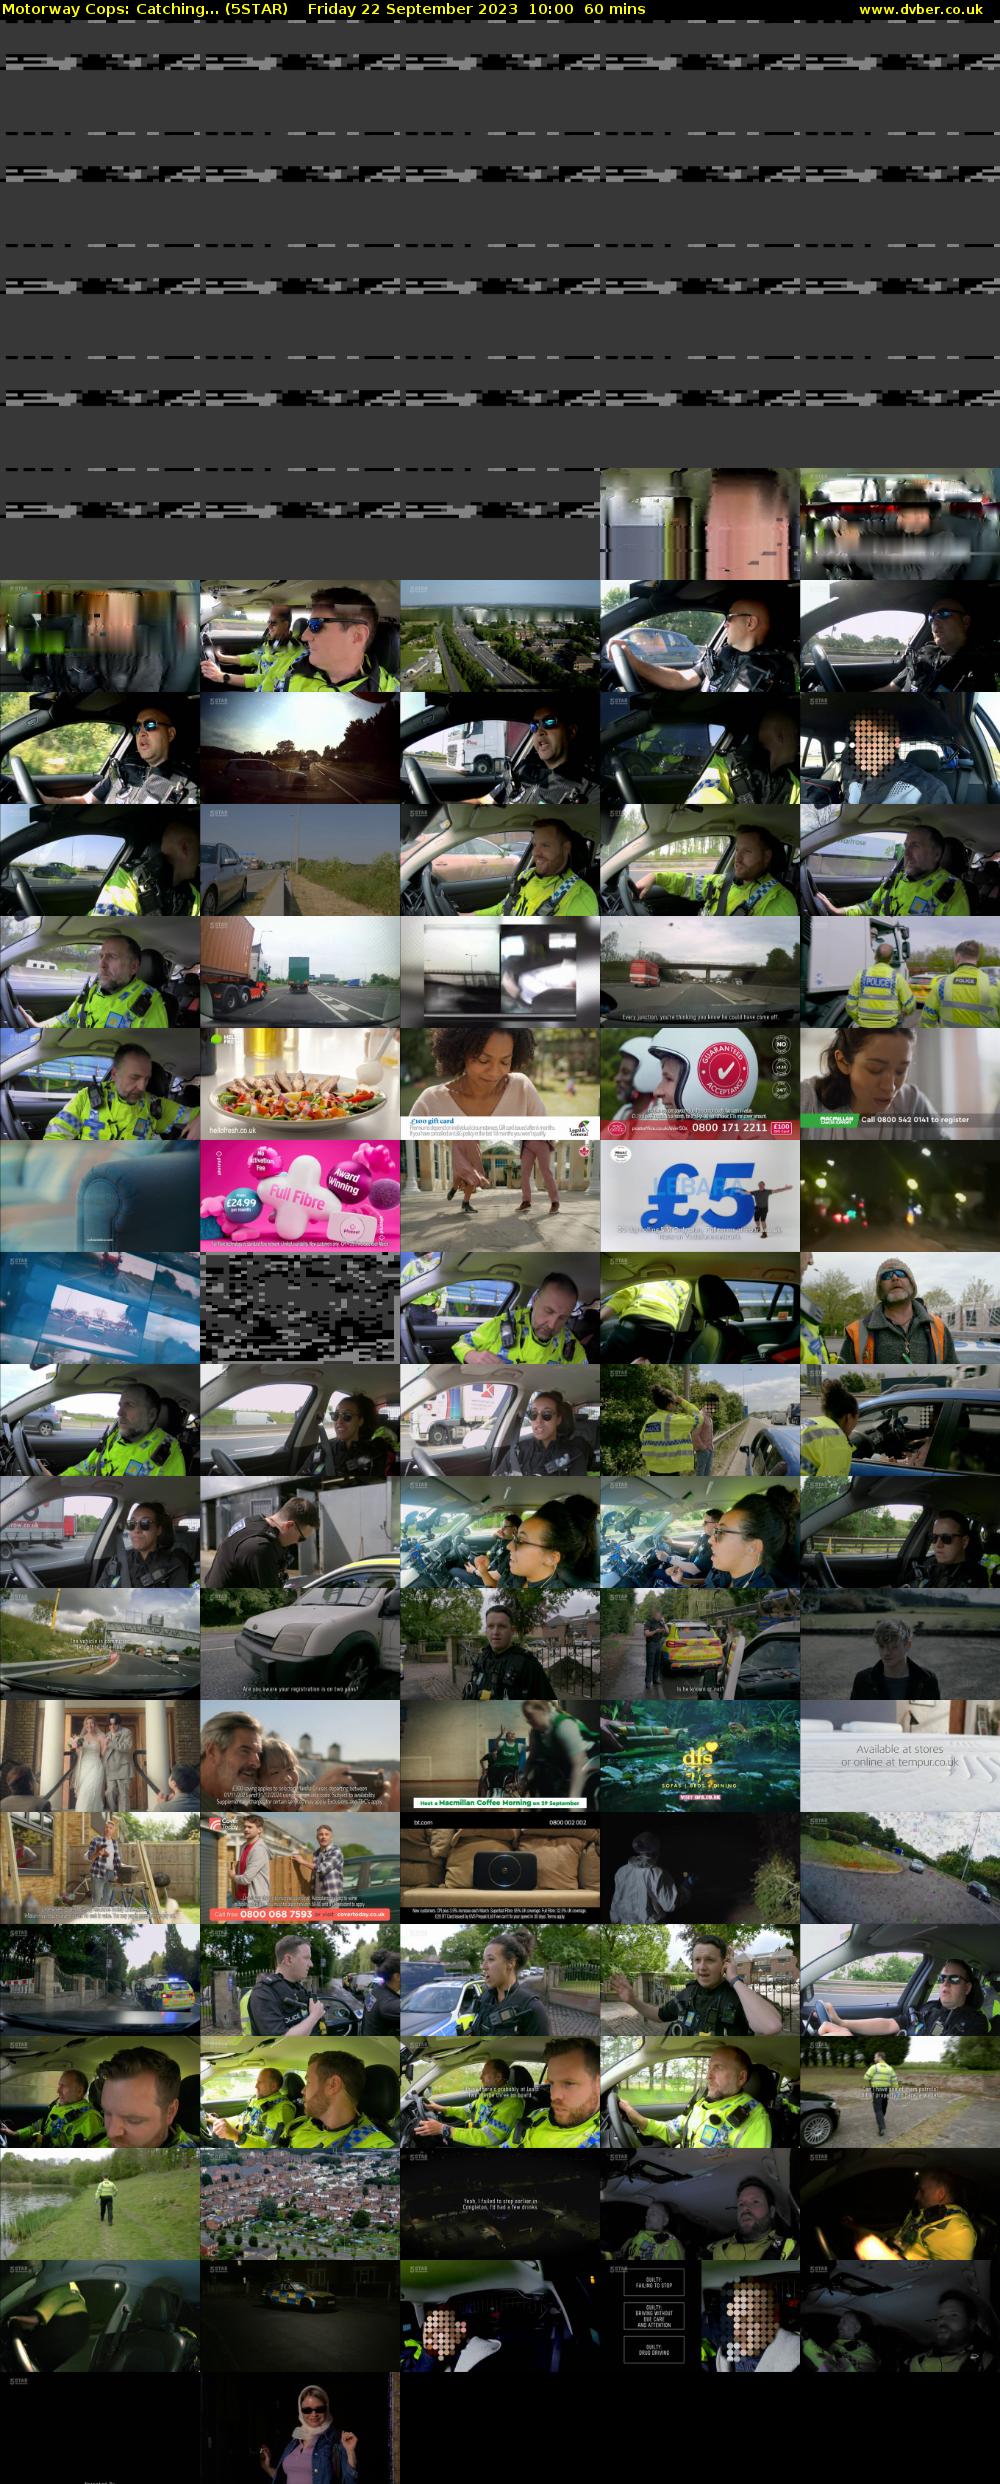 Motorway Cops: Catching... (5STAR) Friday 22 September 2023 10:00 - 11:00